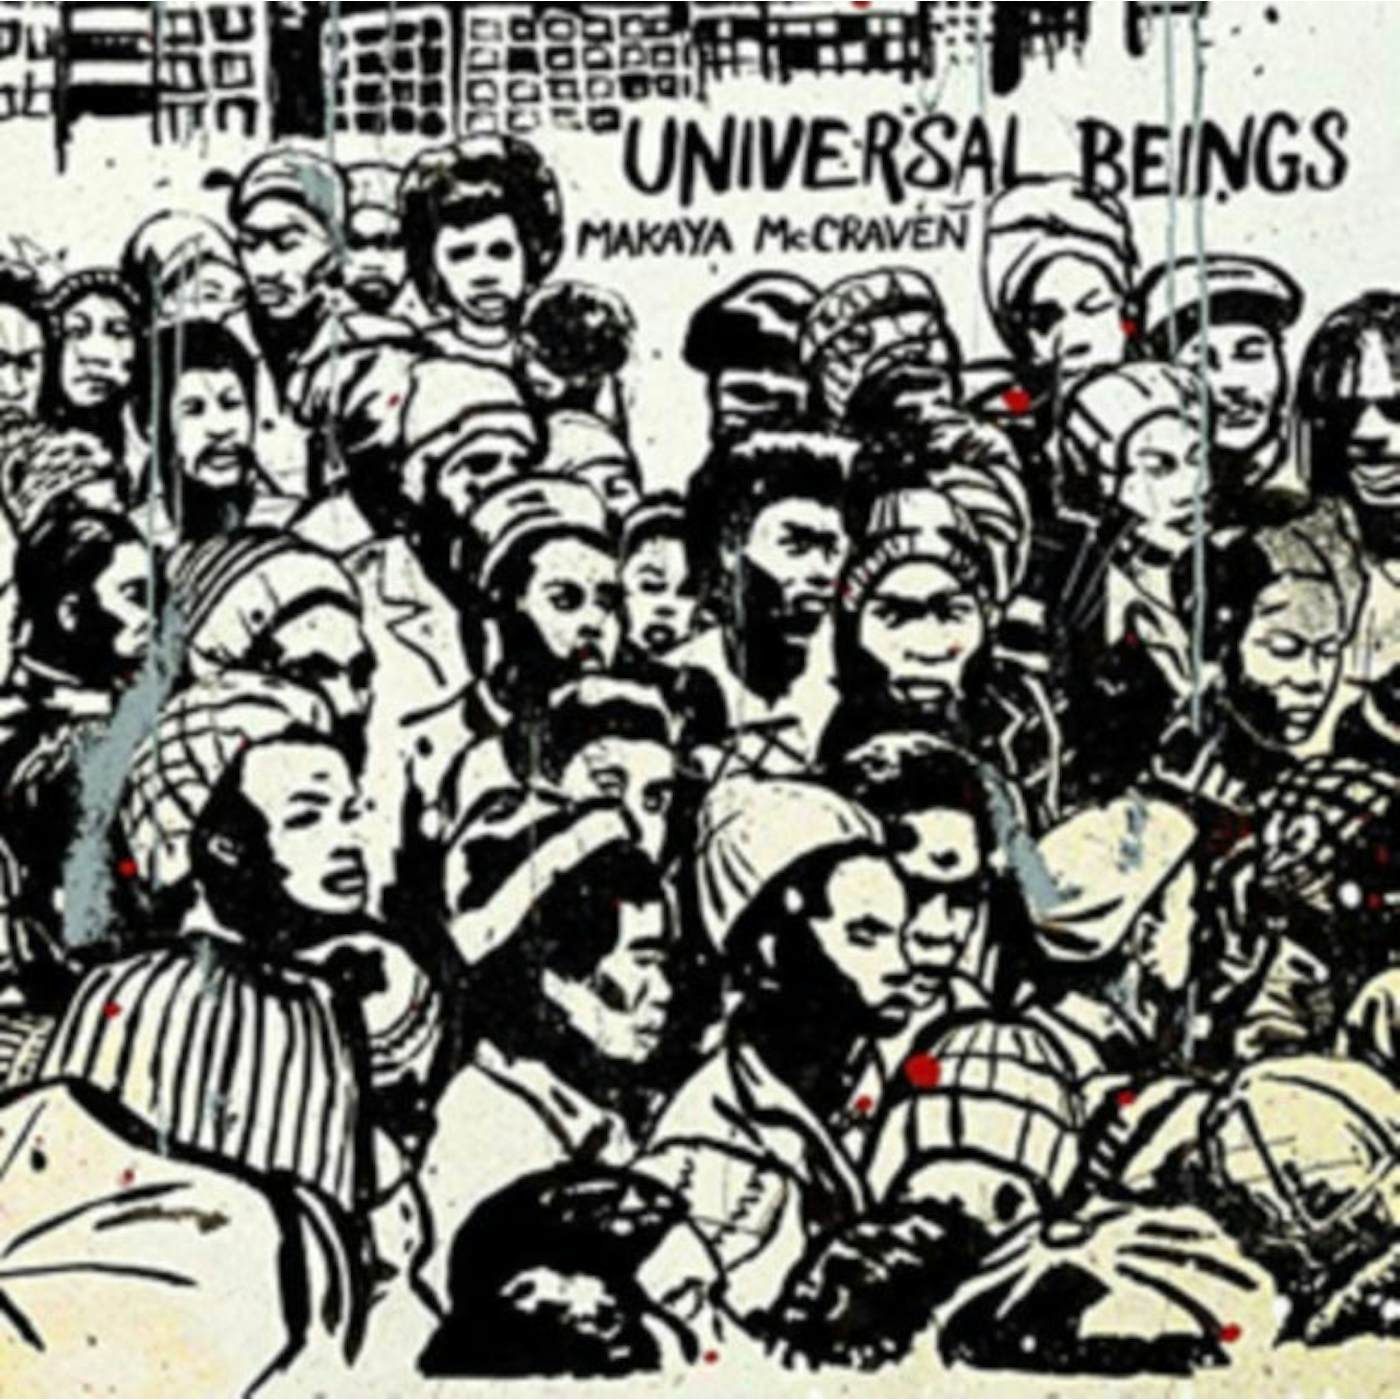 Makaya Mccraven LP Vinyl Record - Universal Beings